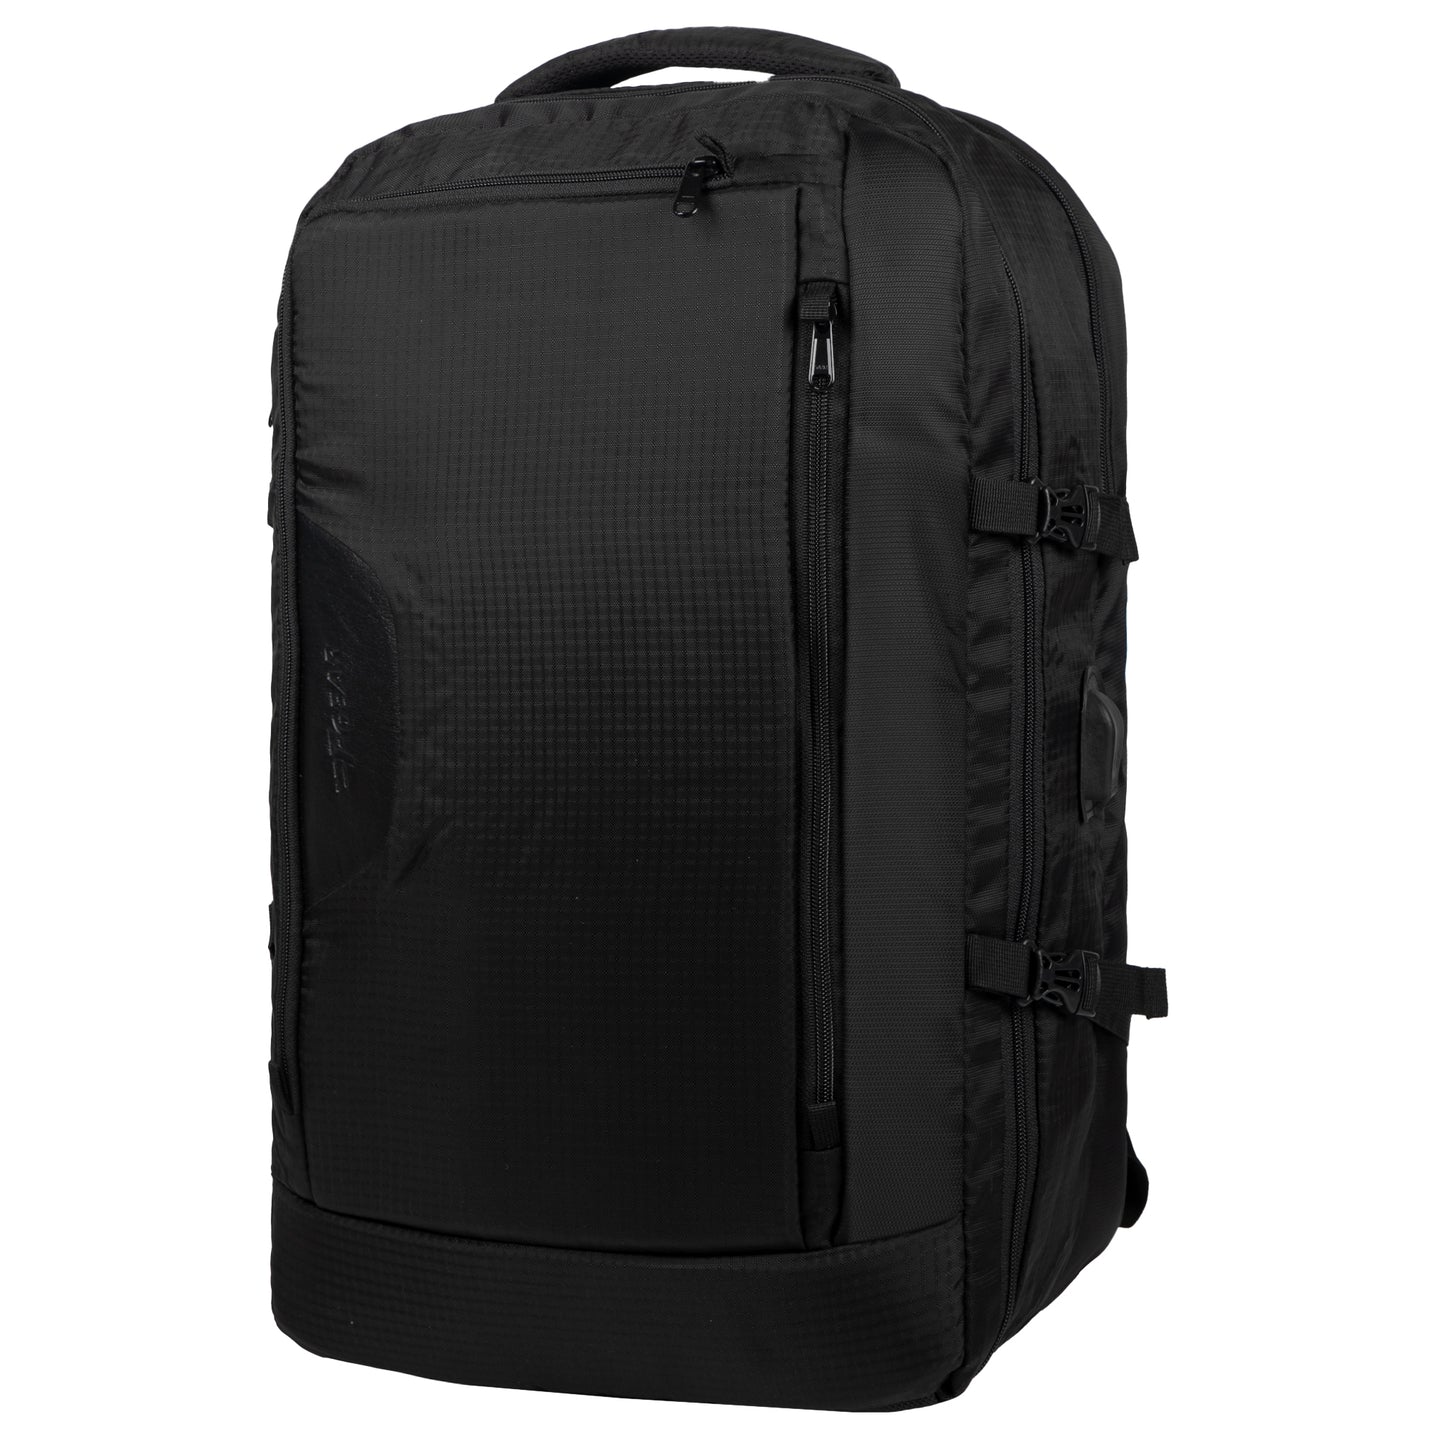 Blackhawk 40L Black Laptop Backpack